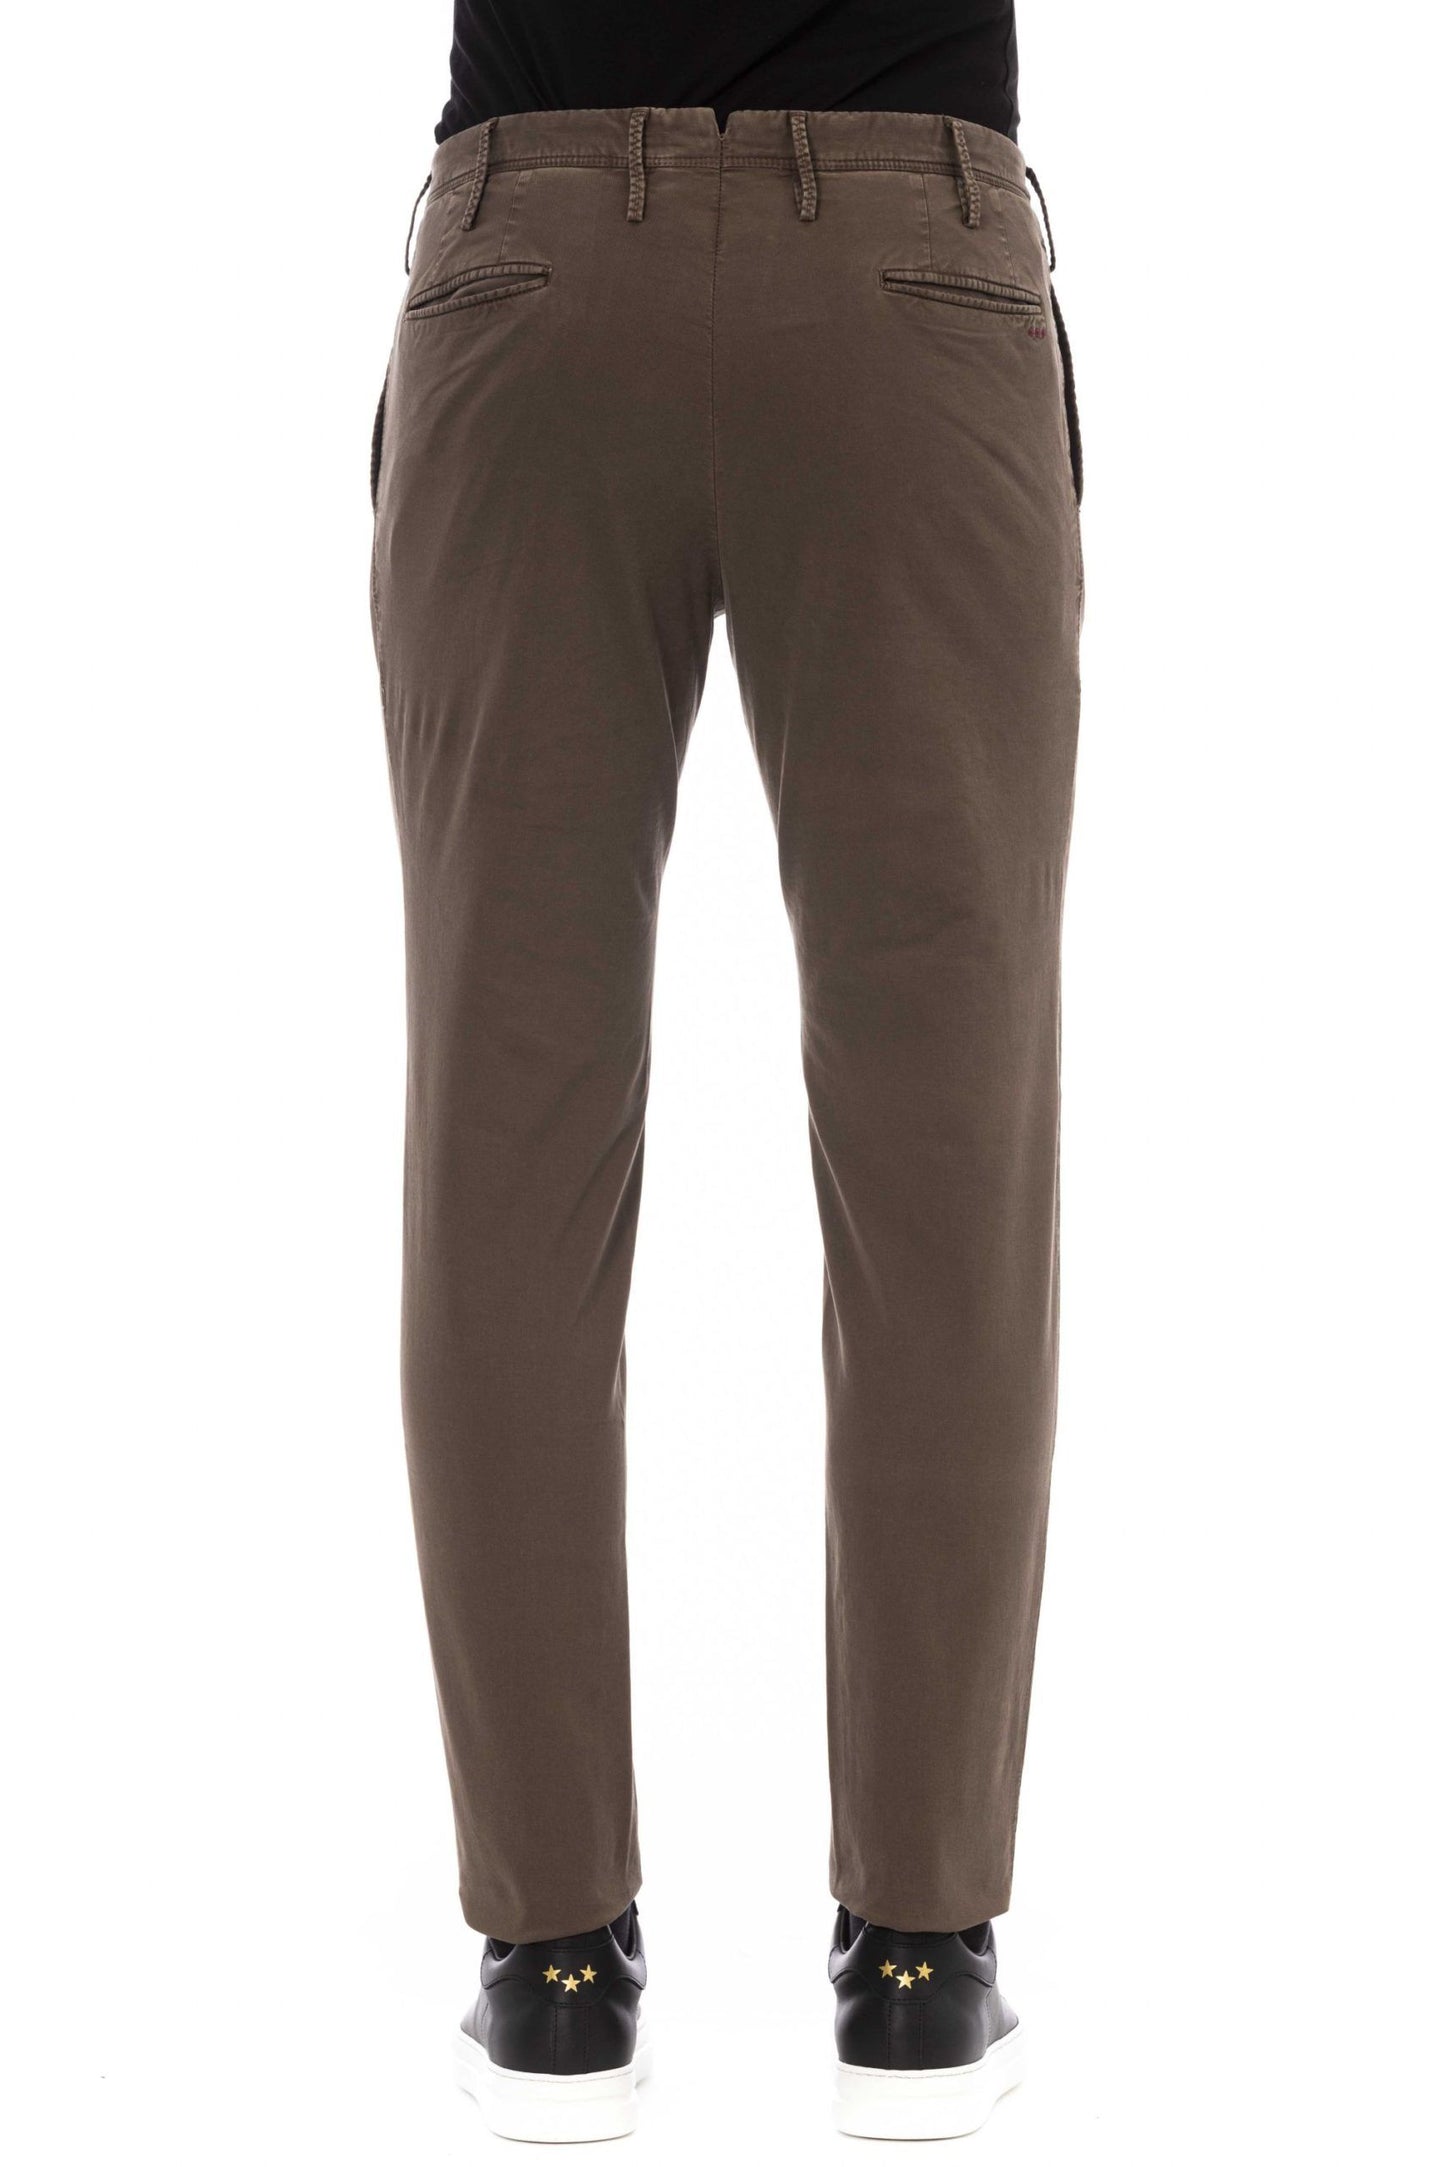 Elegant Brown Trousers for Sophisticated Men